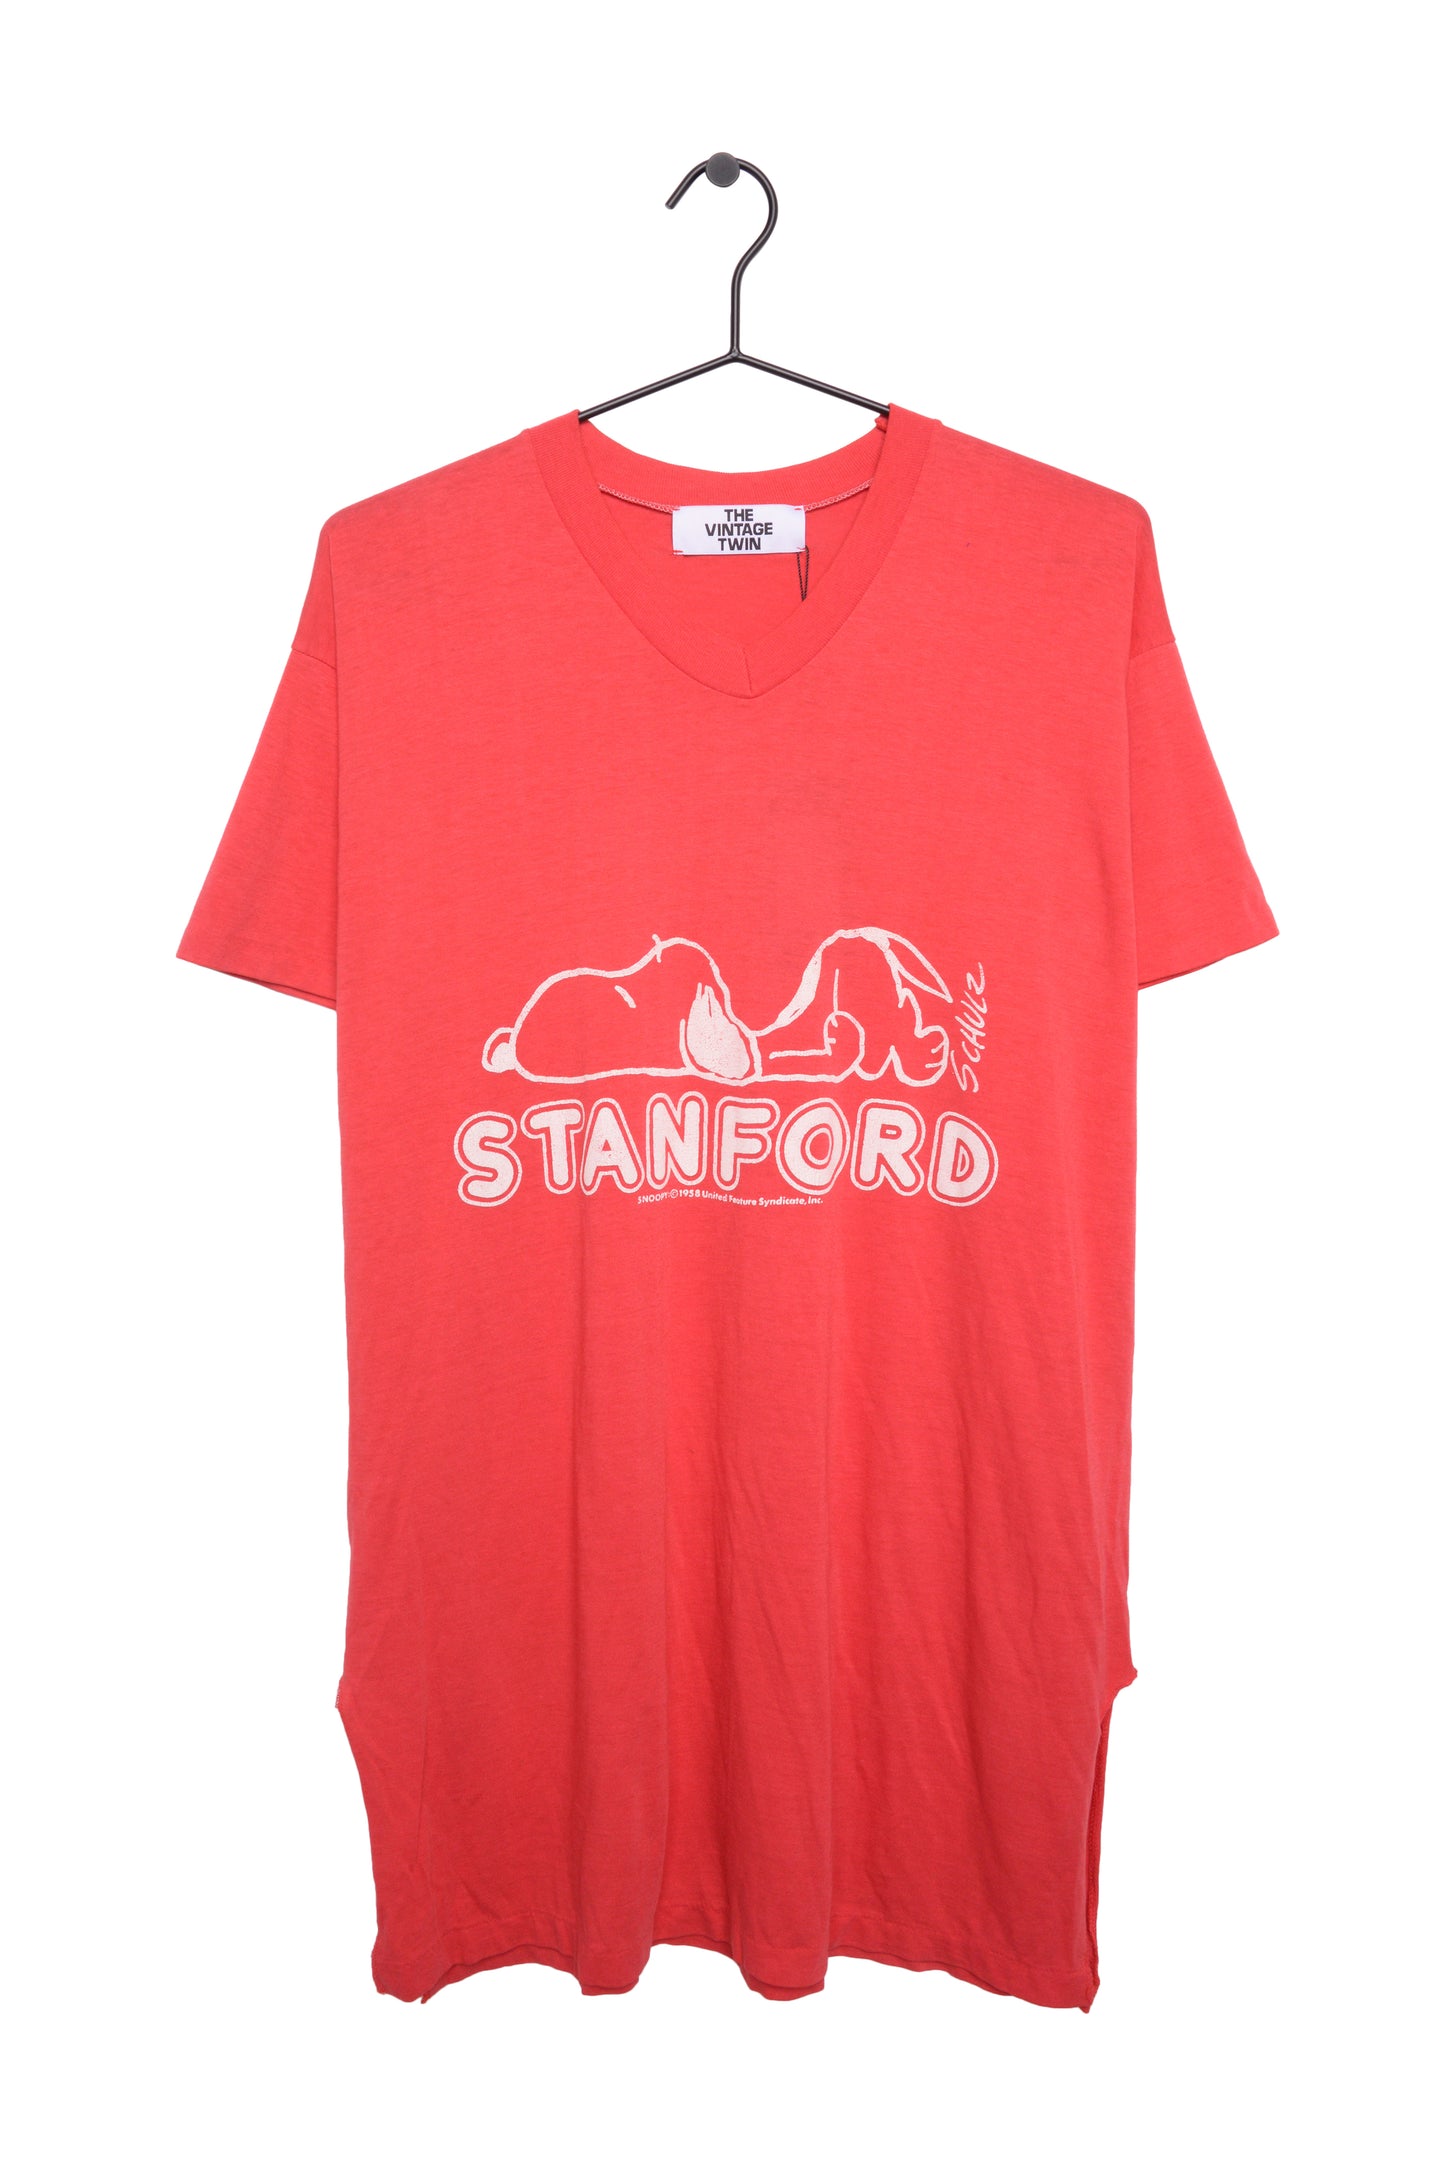 Stanford University Snoopy Tee